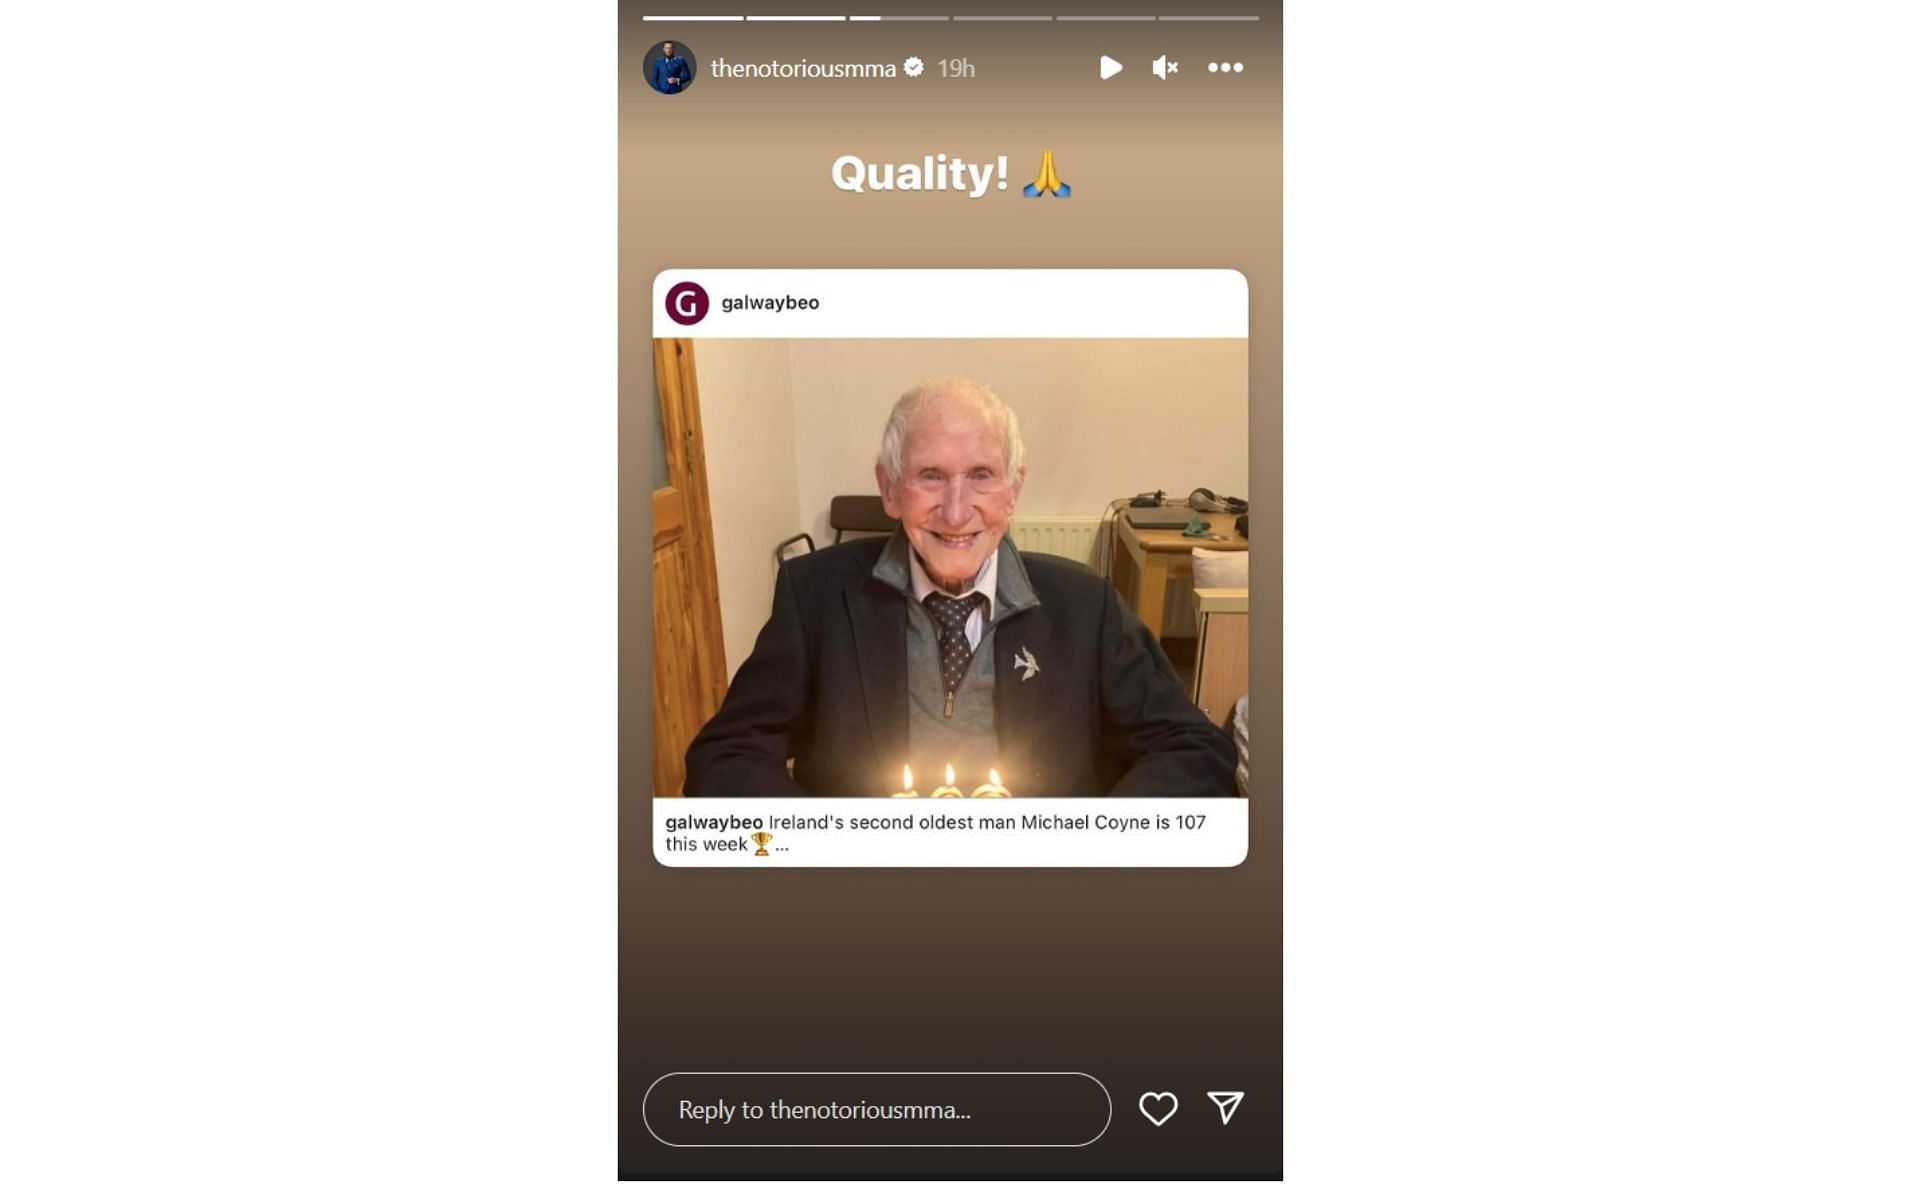 McGregor&#039;s Instagram story reacting to Coyne&#039;s 107th birthday [Image courtesy: @thenotoriousmma - Instagram]